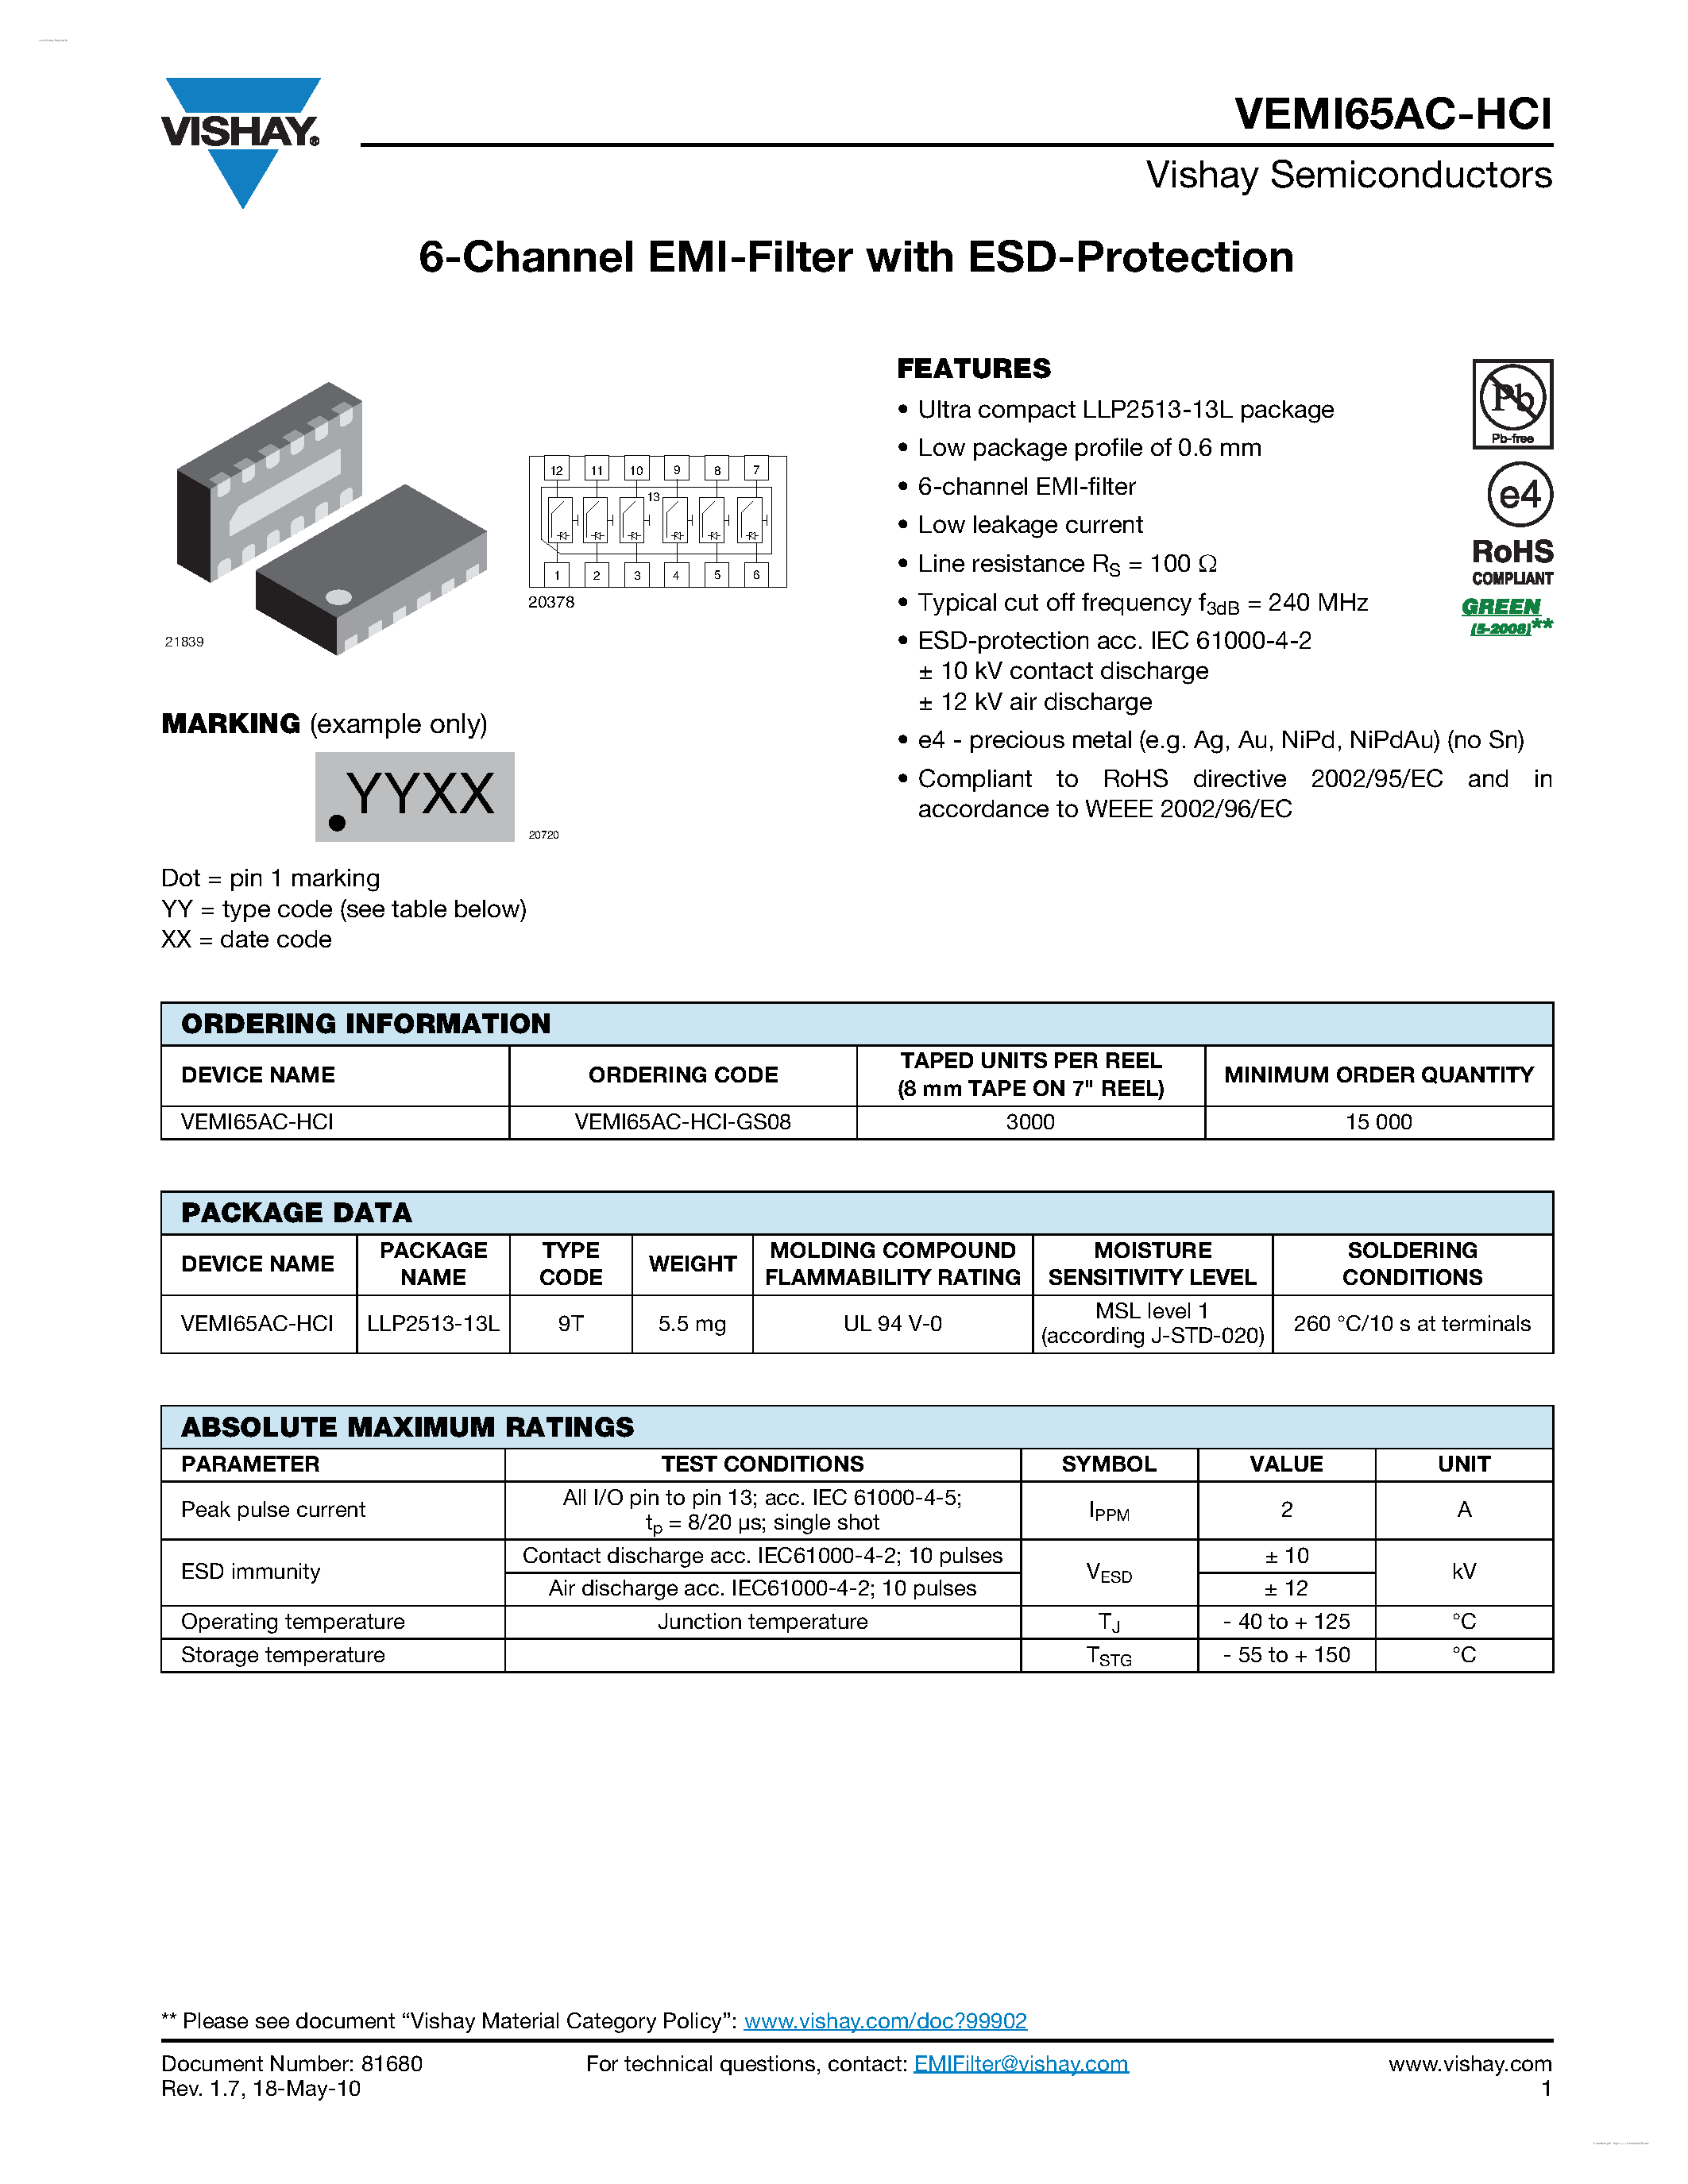 Datasheet VEMI65AC-HCI - 6-Channel EMI-Filter page 1